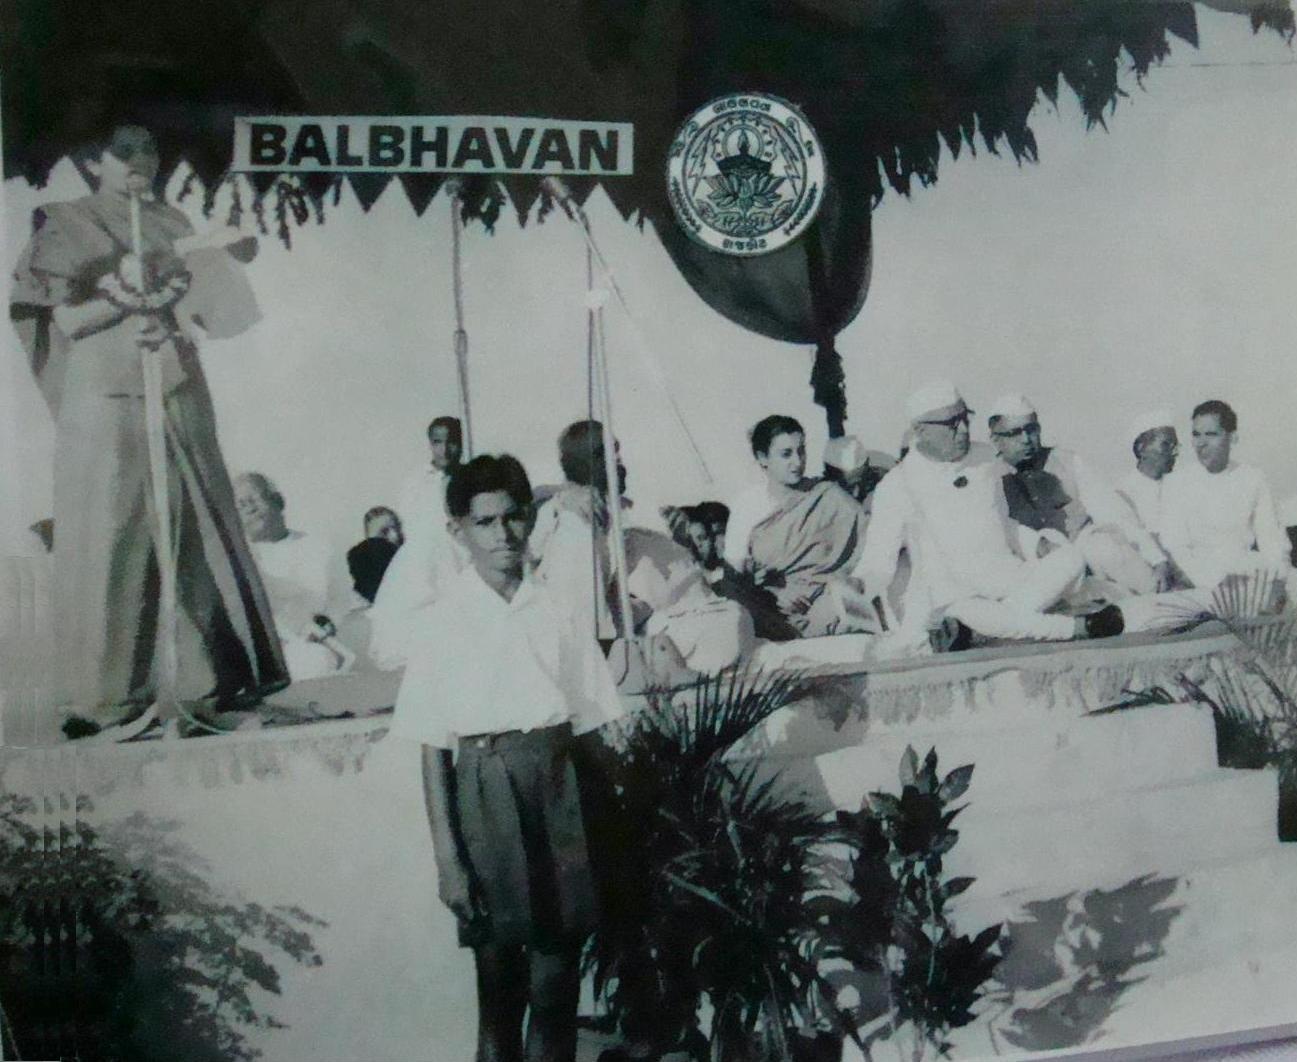 Vidyaben addressing Bal Bhavan rally in 1954; seated on the dias are Pandit Nehru, Indira Gandhi and Manubhai among others